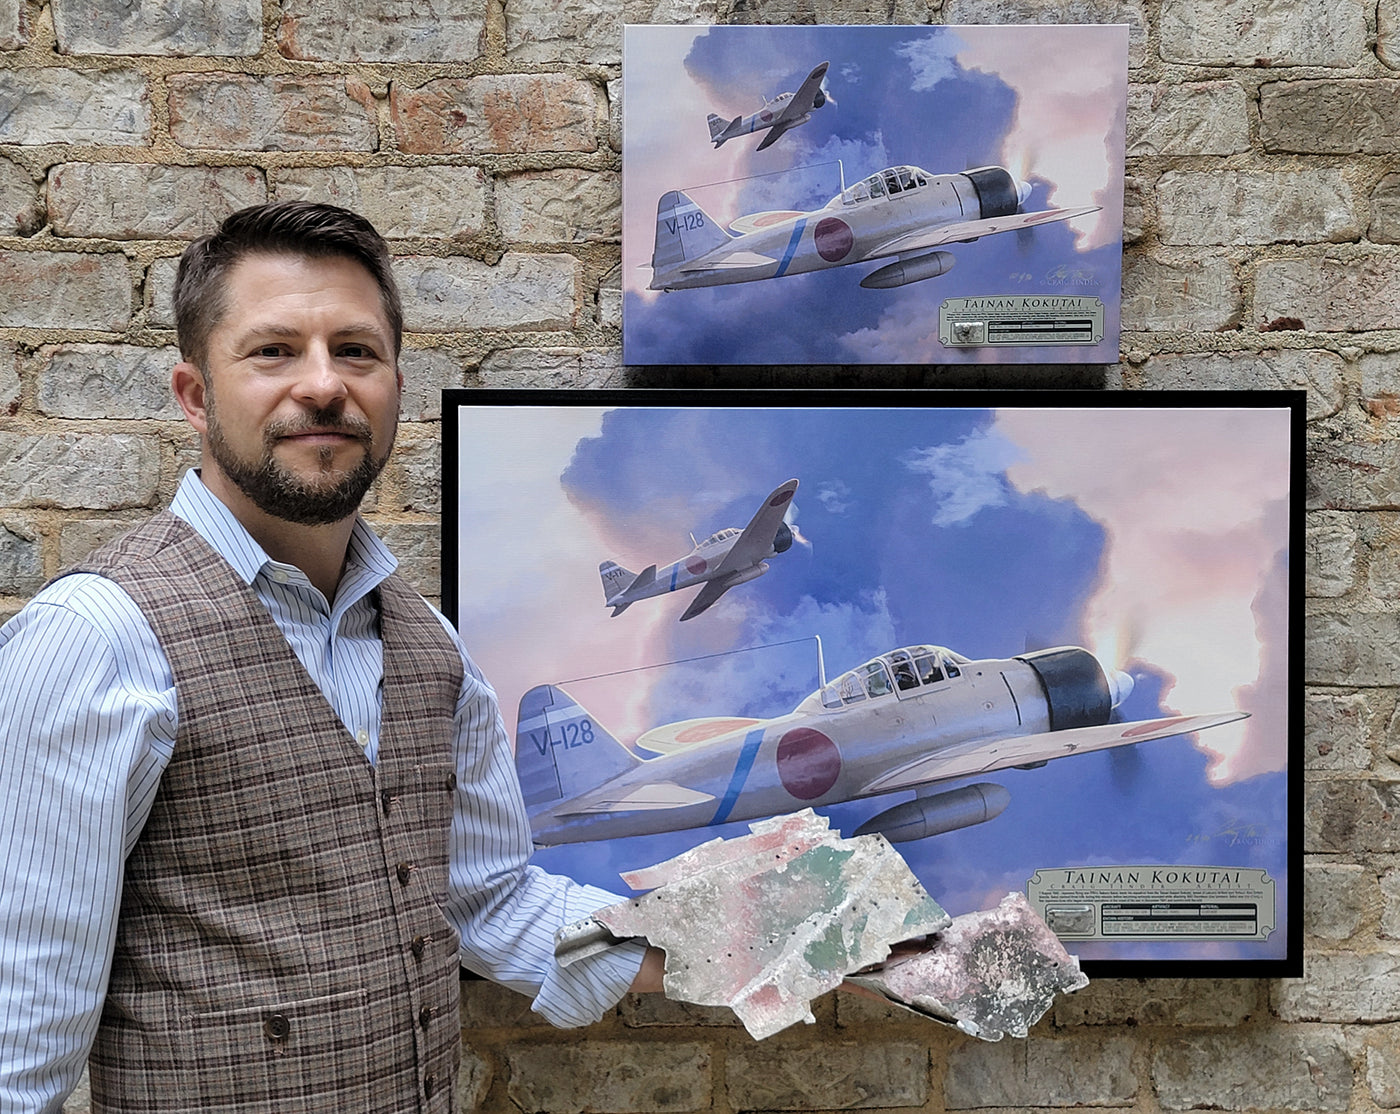 Tainan Kokutai - A6M2 Zero Aviation Art-Art Print-Aces In Action: The Workshop of Artist Craig Tinder